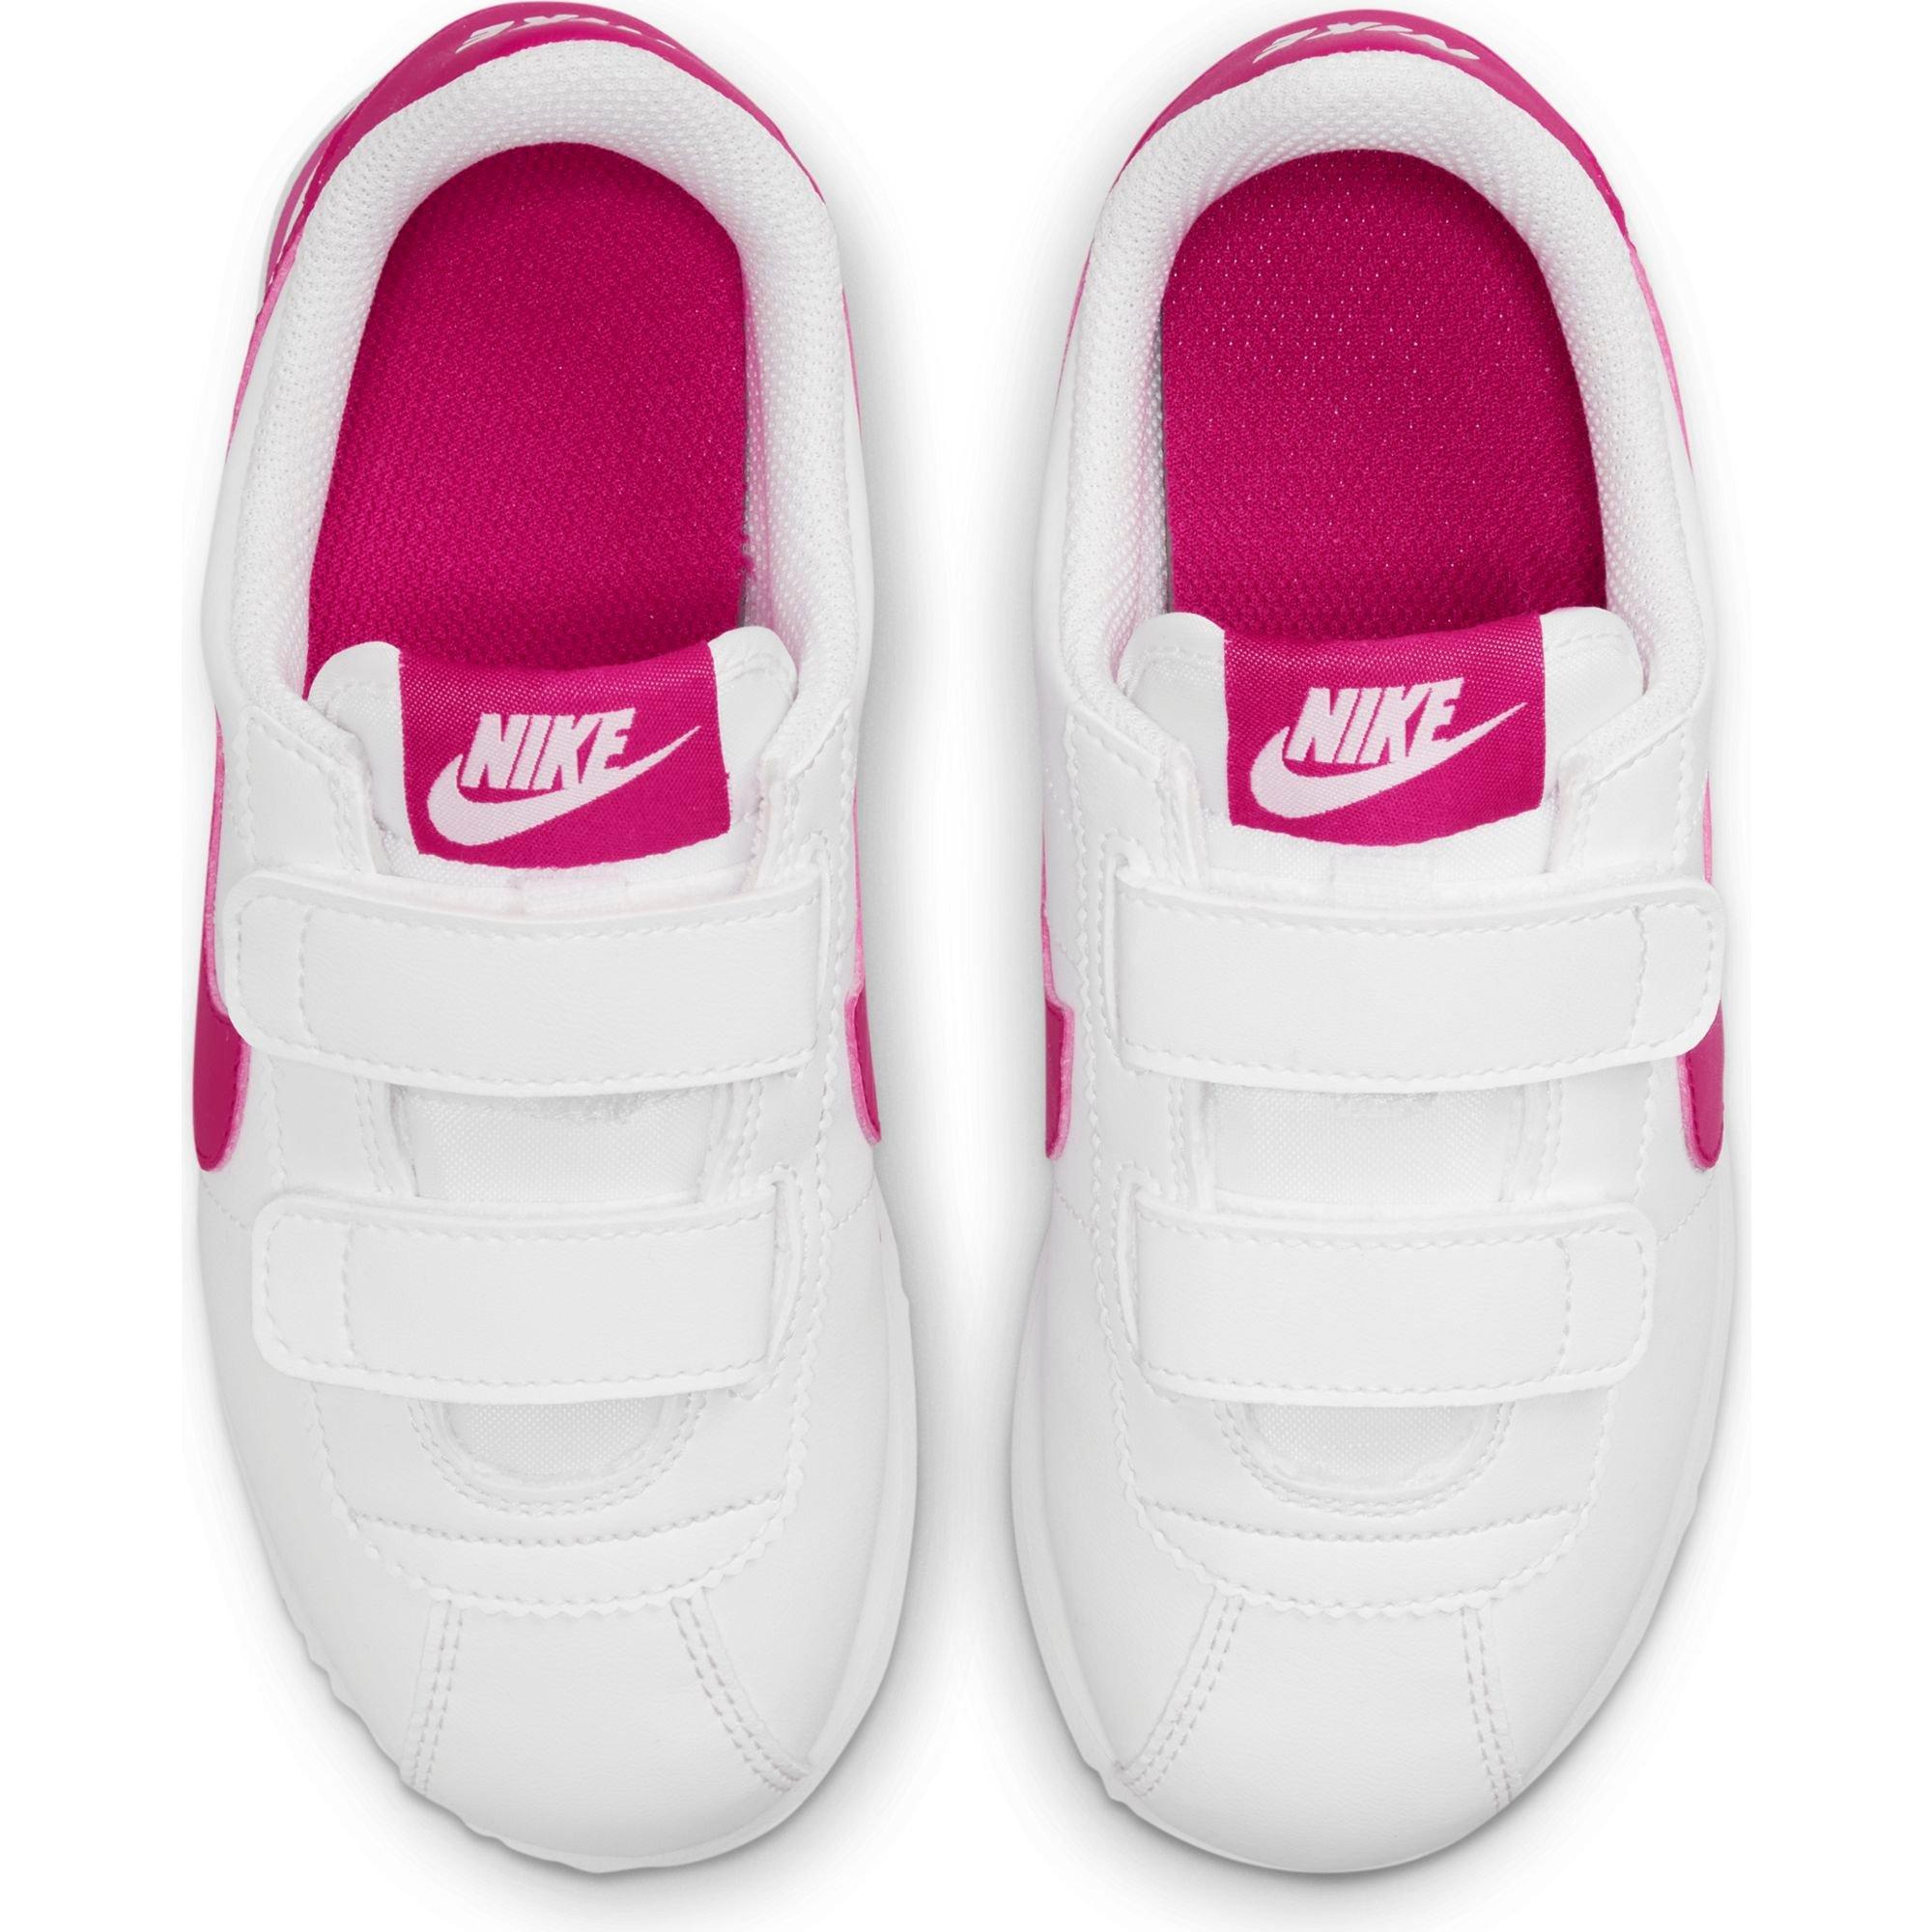 Nike Basic Prime" Preschool Girls' Shoe